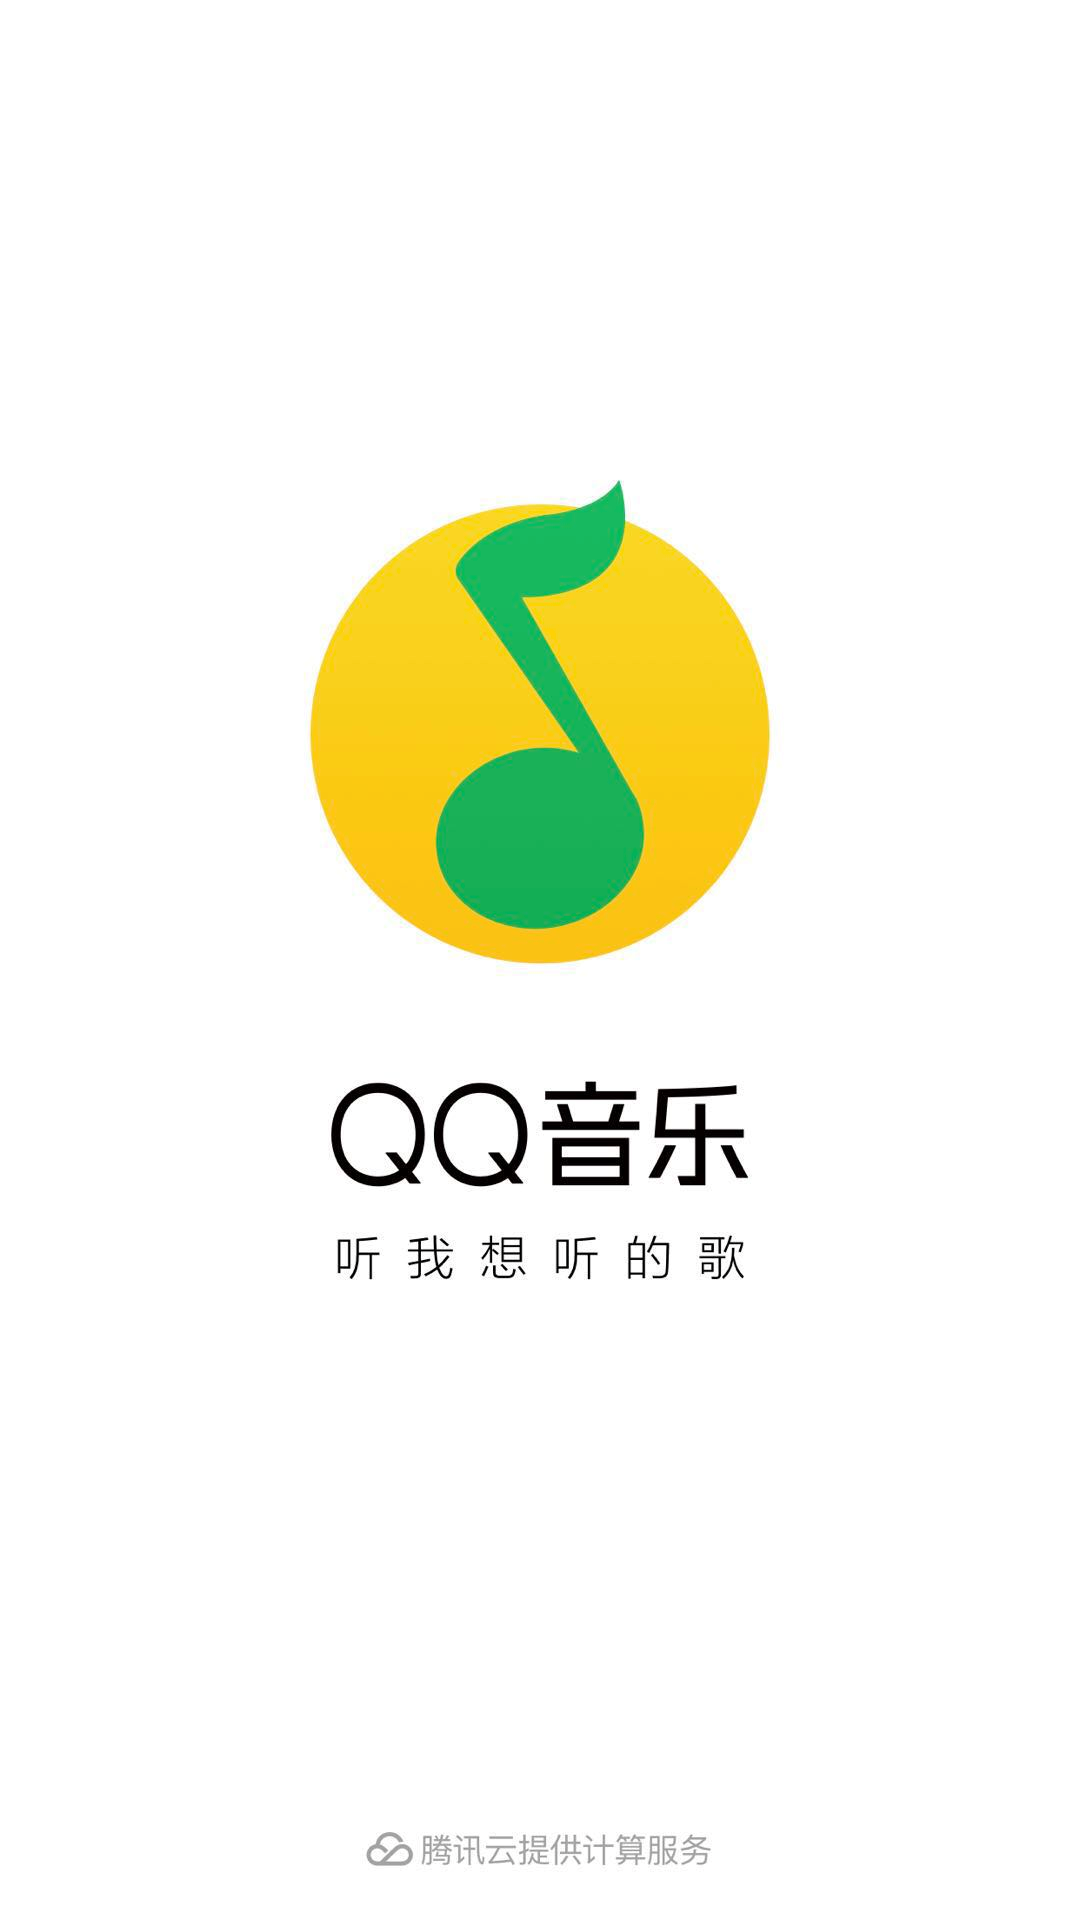 Qq com logo hi-res stock photography and images - Alamy